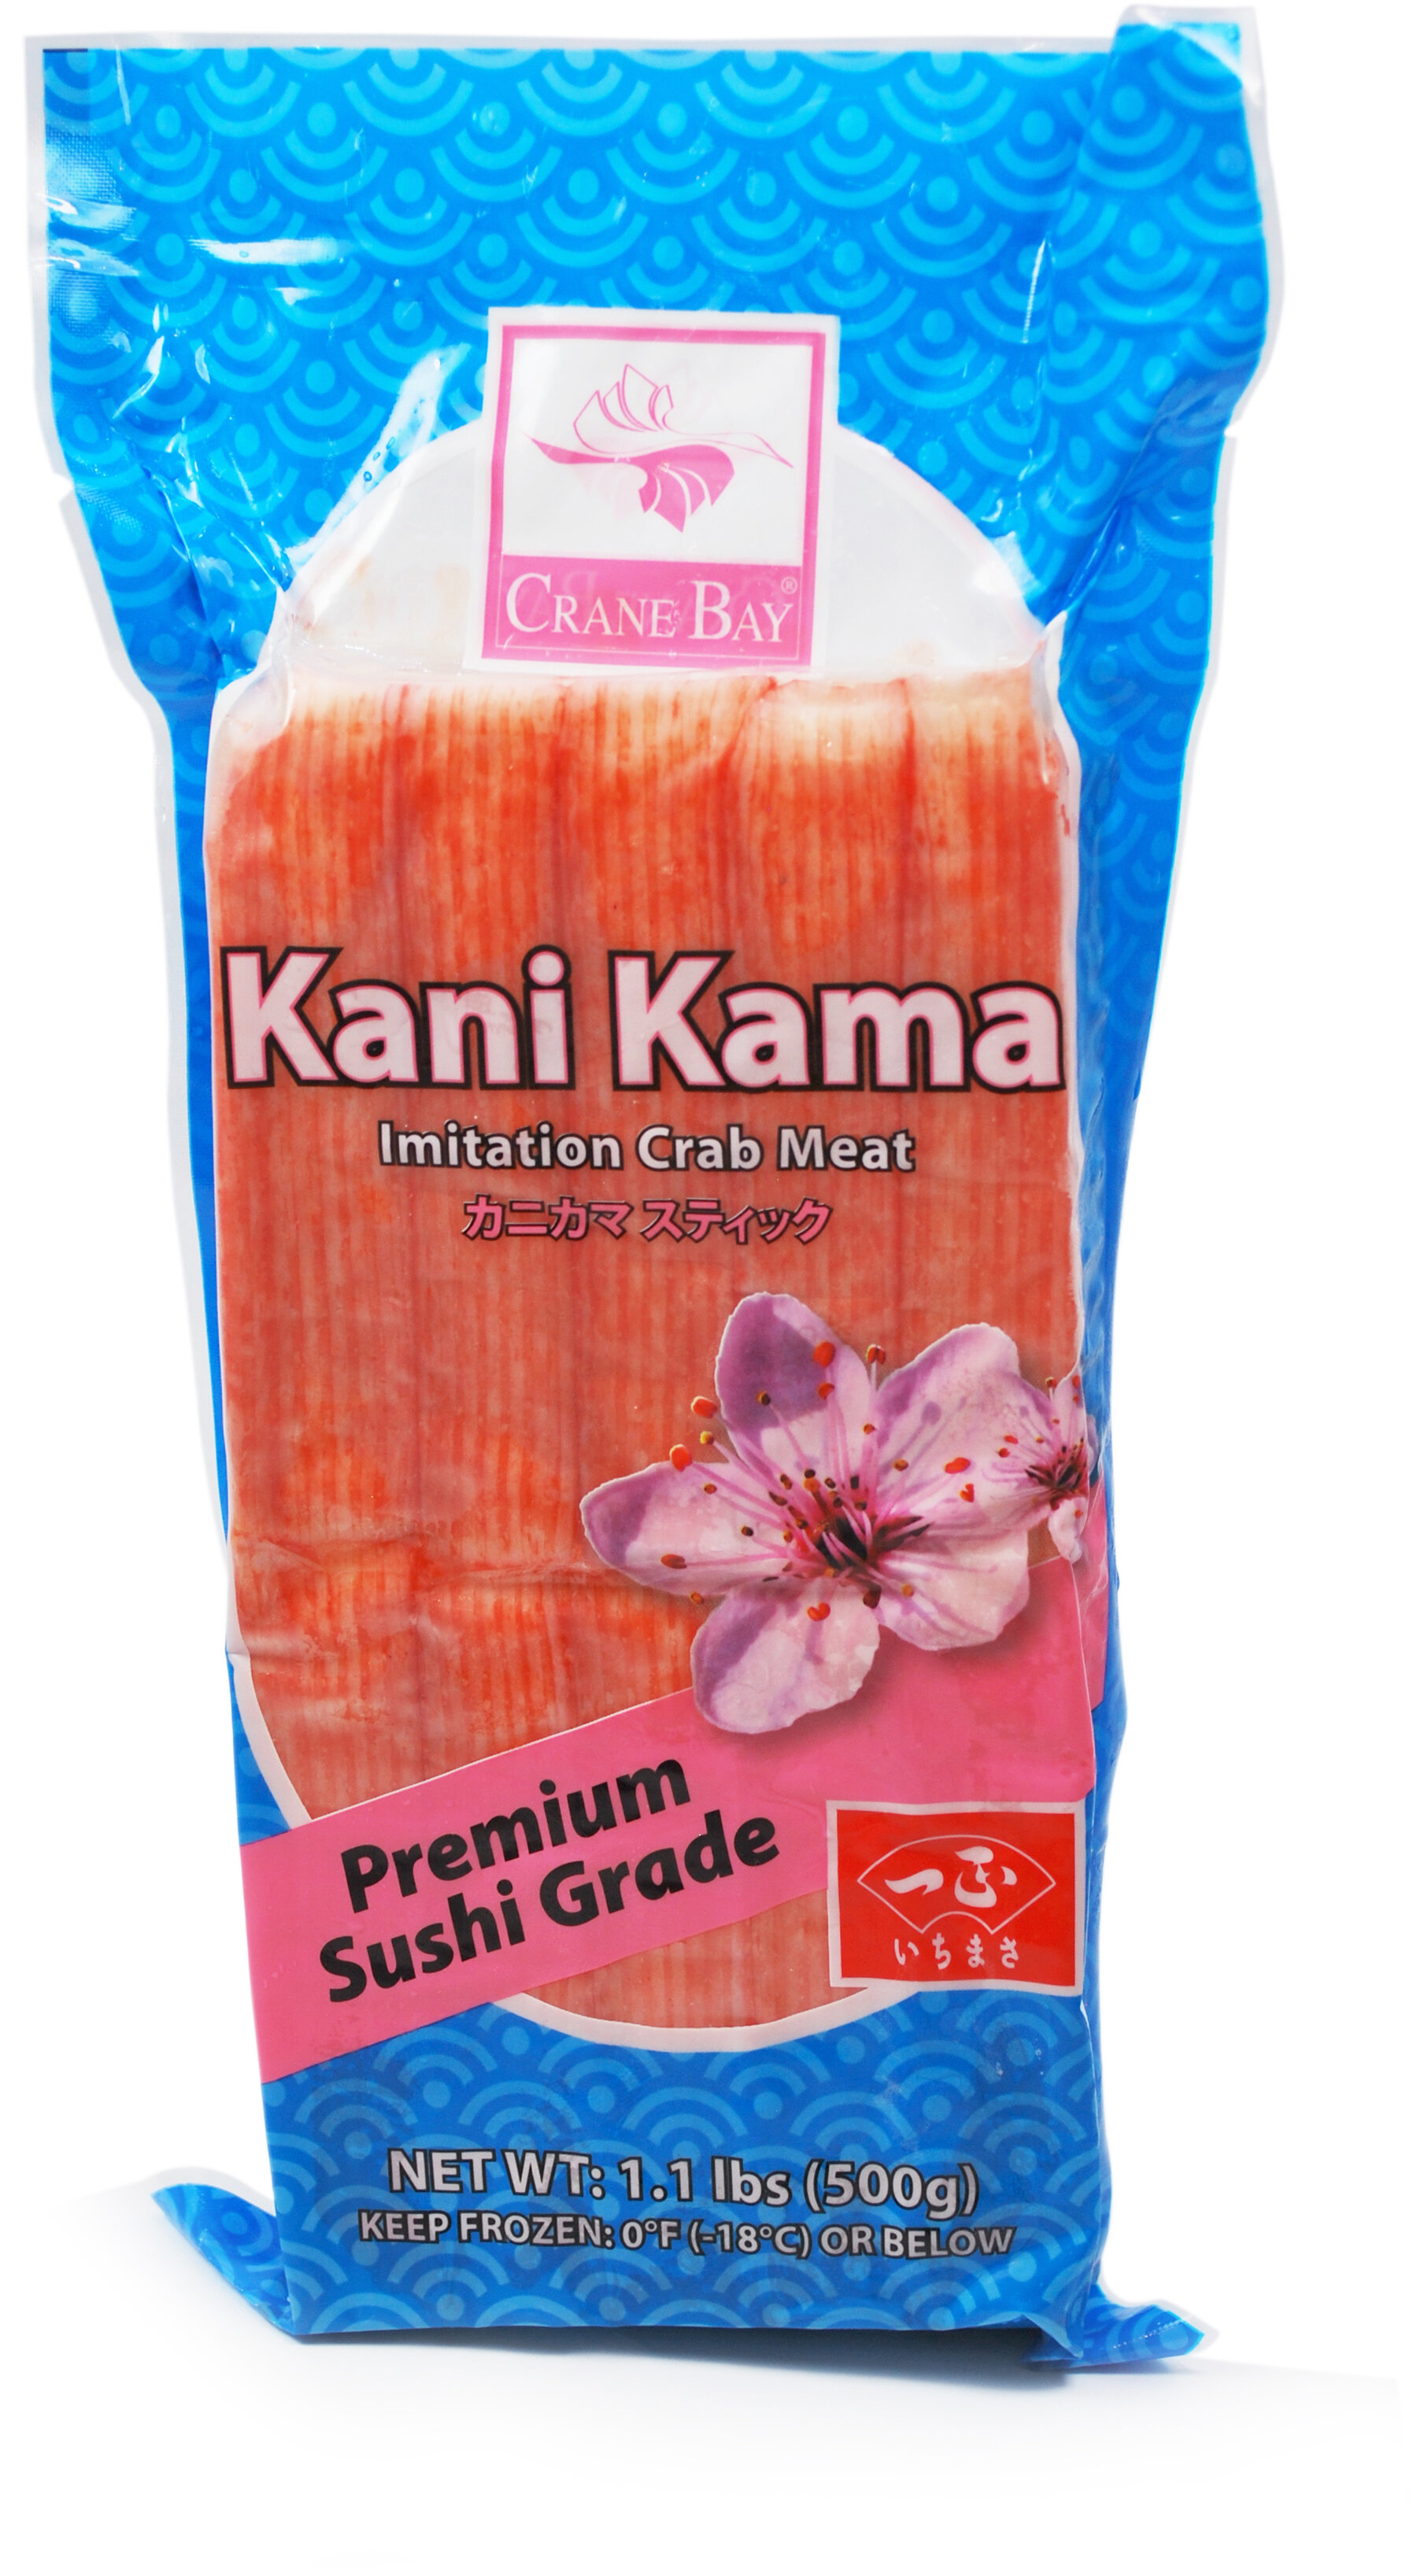 Kani Kama Packaging 2020-2.jpg